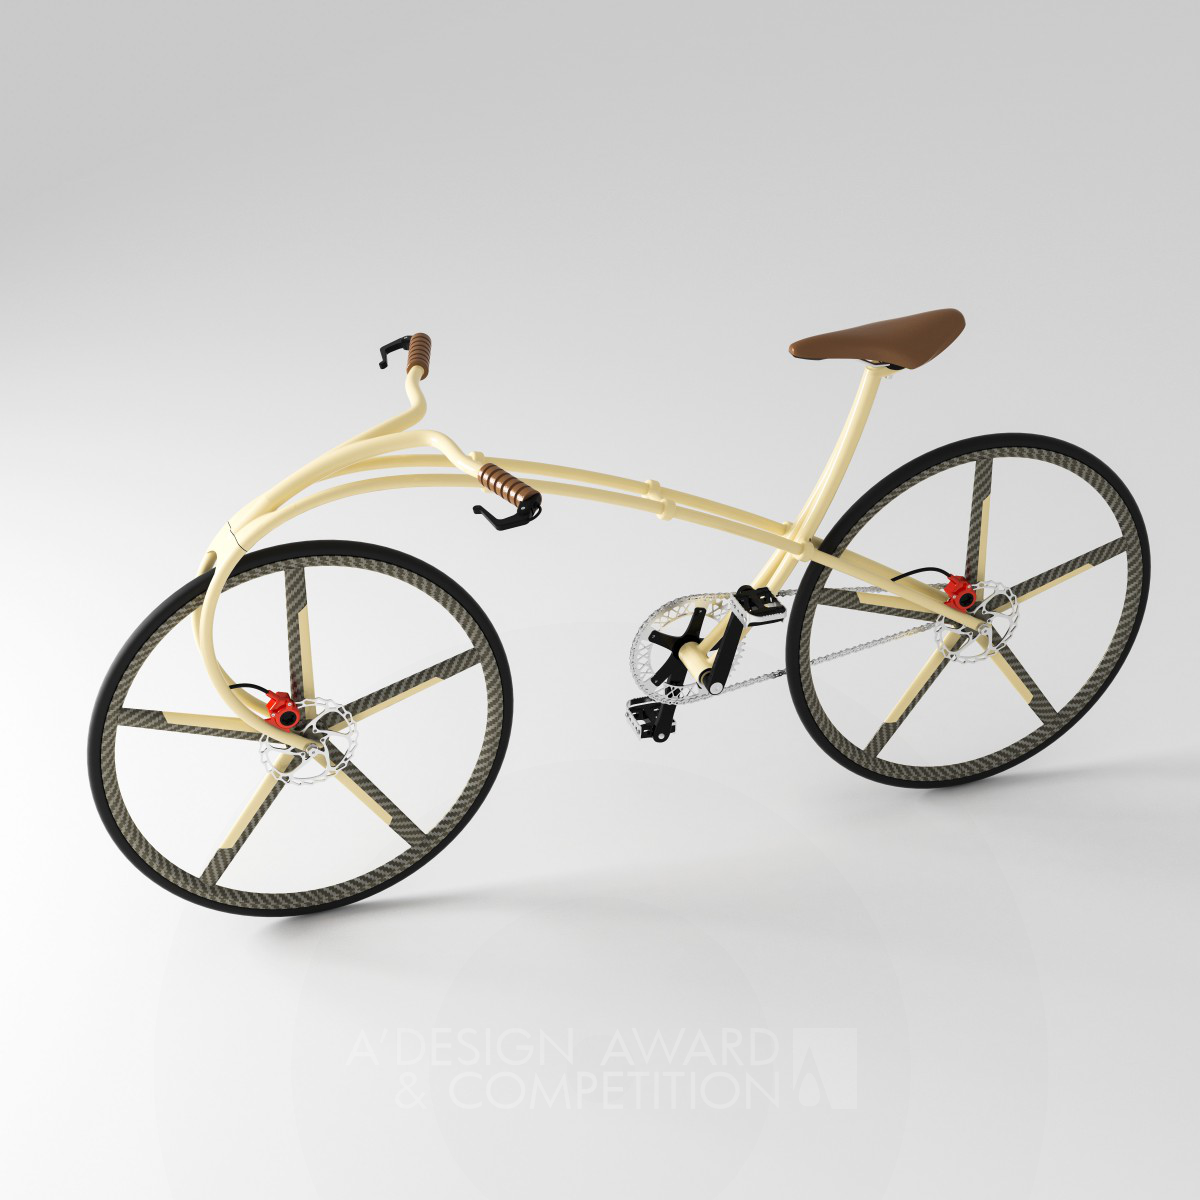 Bitube Bicylcle by Levent Ondogan